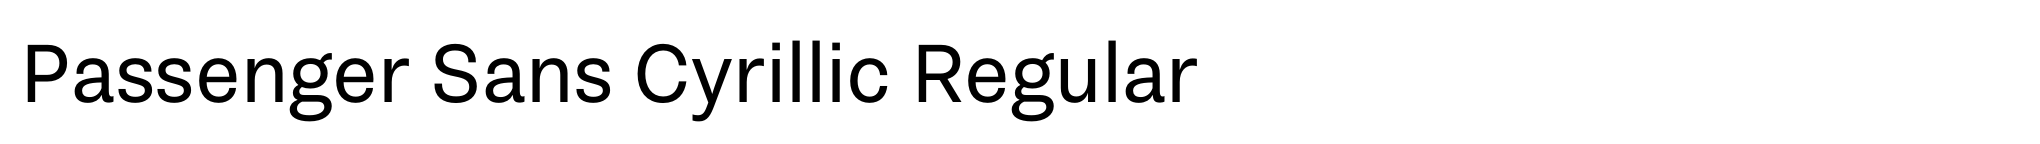 Passenger Sans Cyrillic Regular image